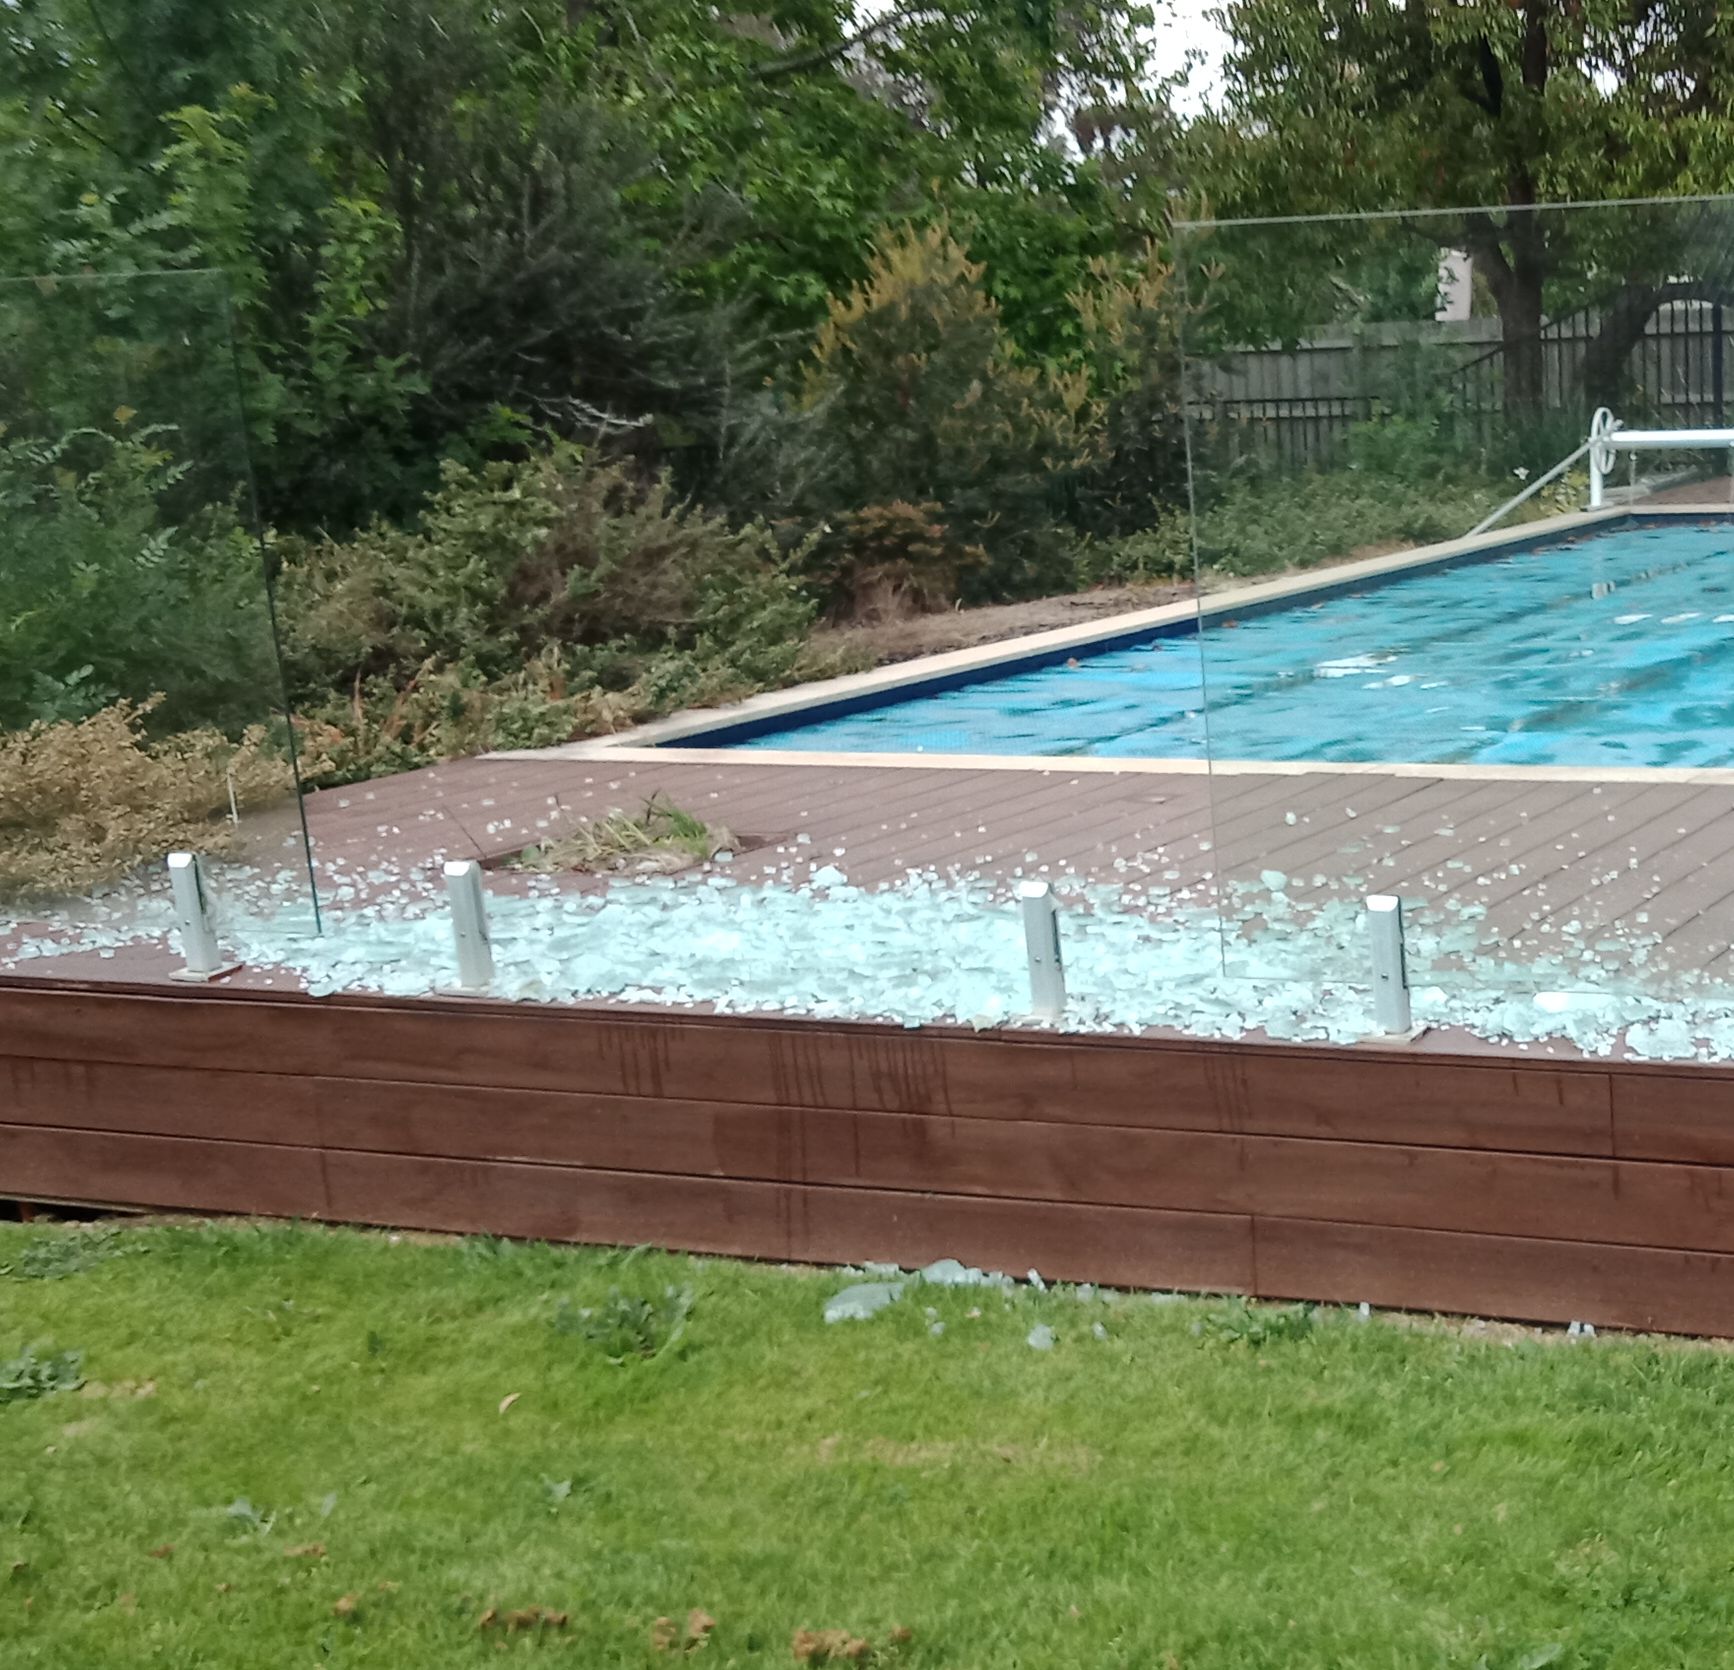 A broken poolside glass panel